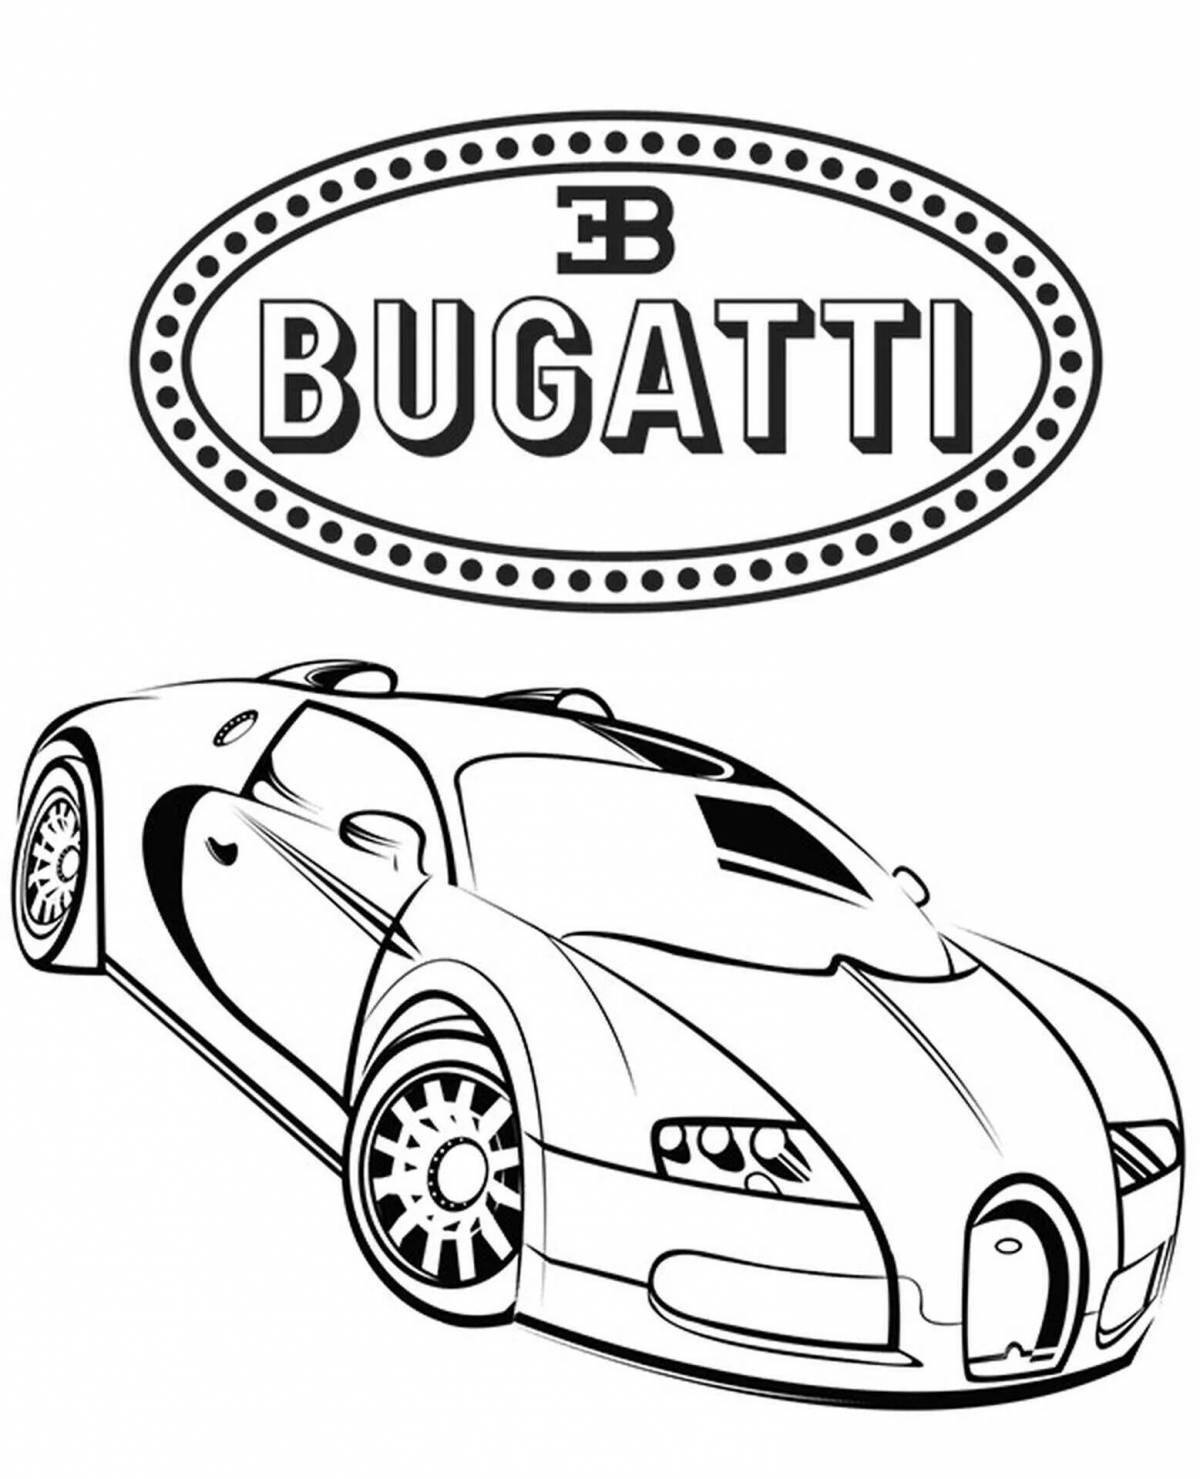 Shiny bugatti for boys